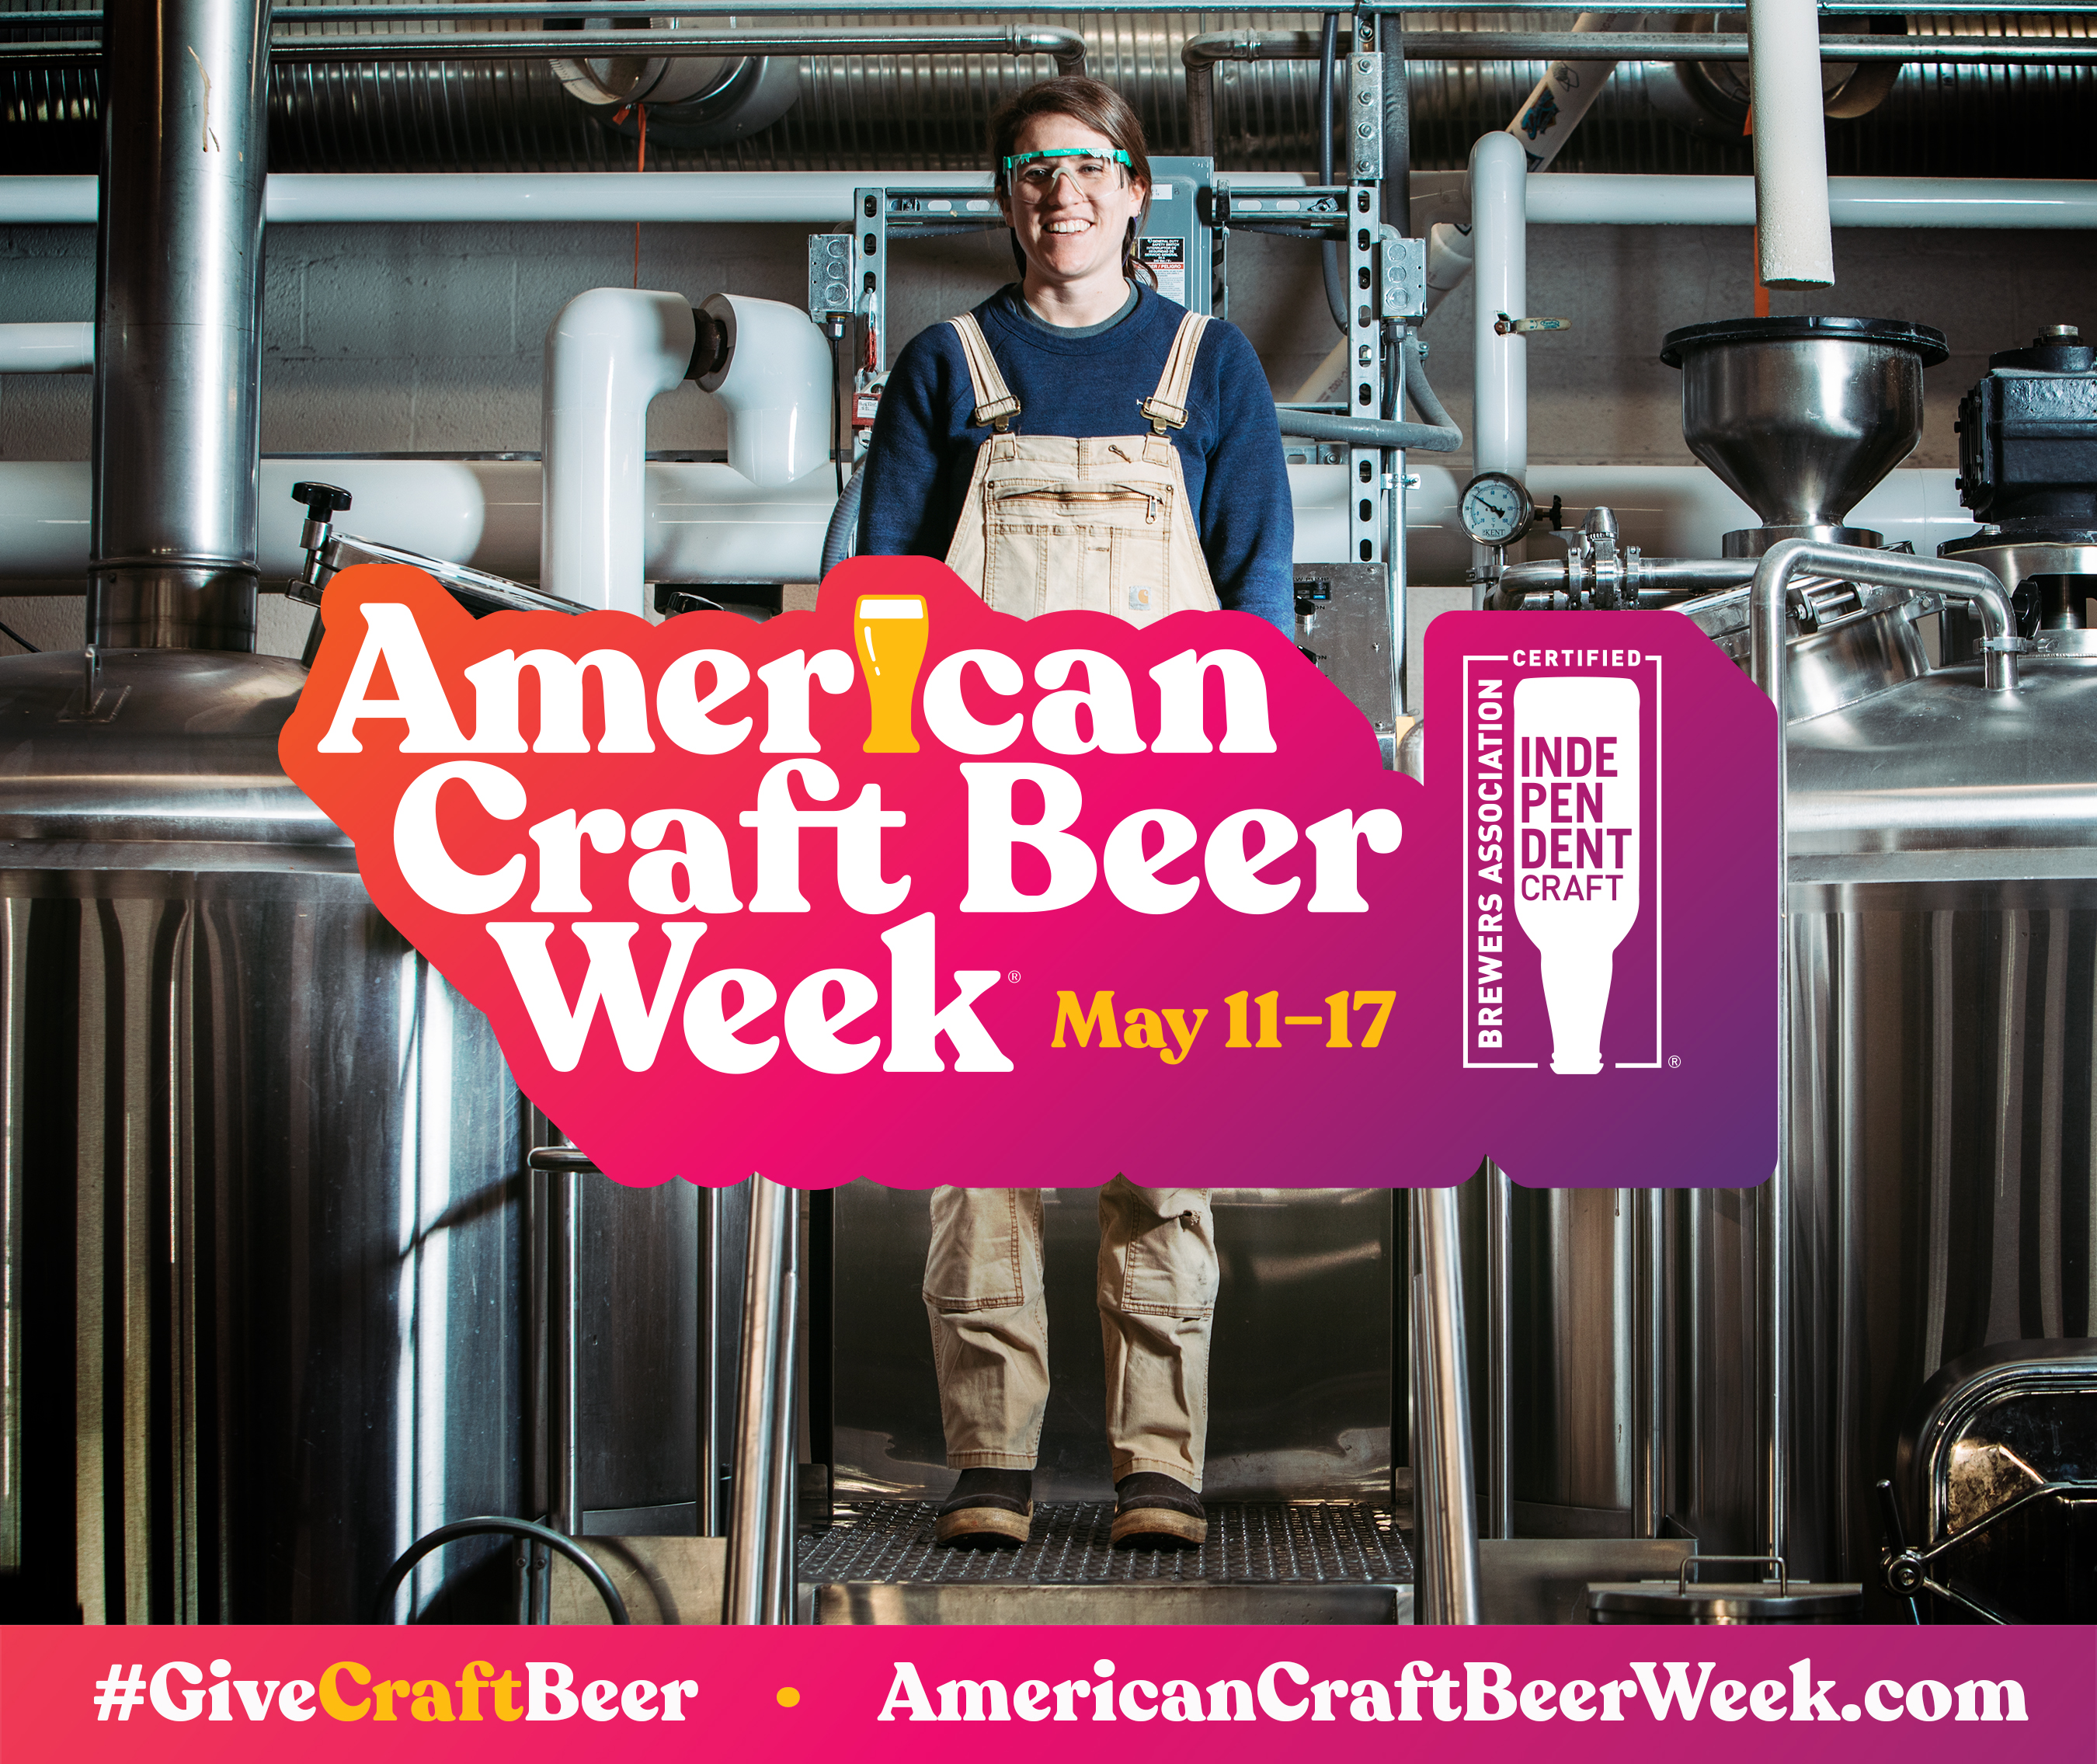 American Craft Beer Week takes place May 11-17, 2020